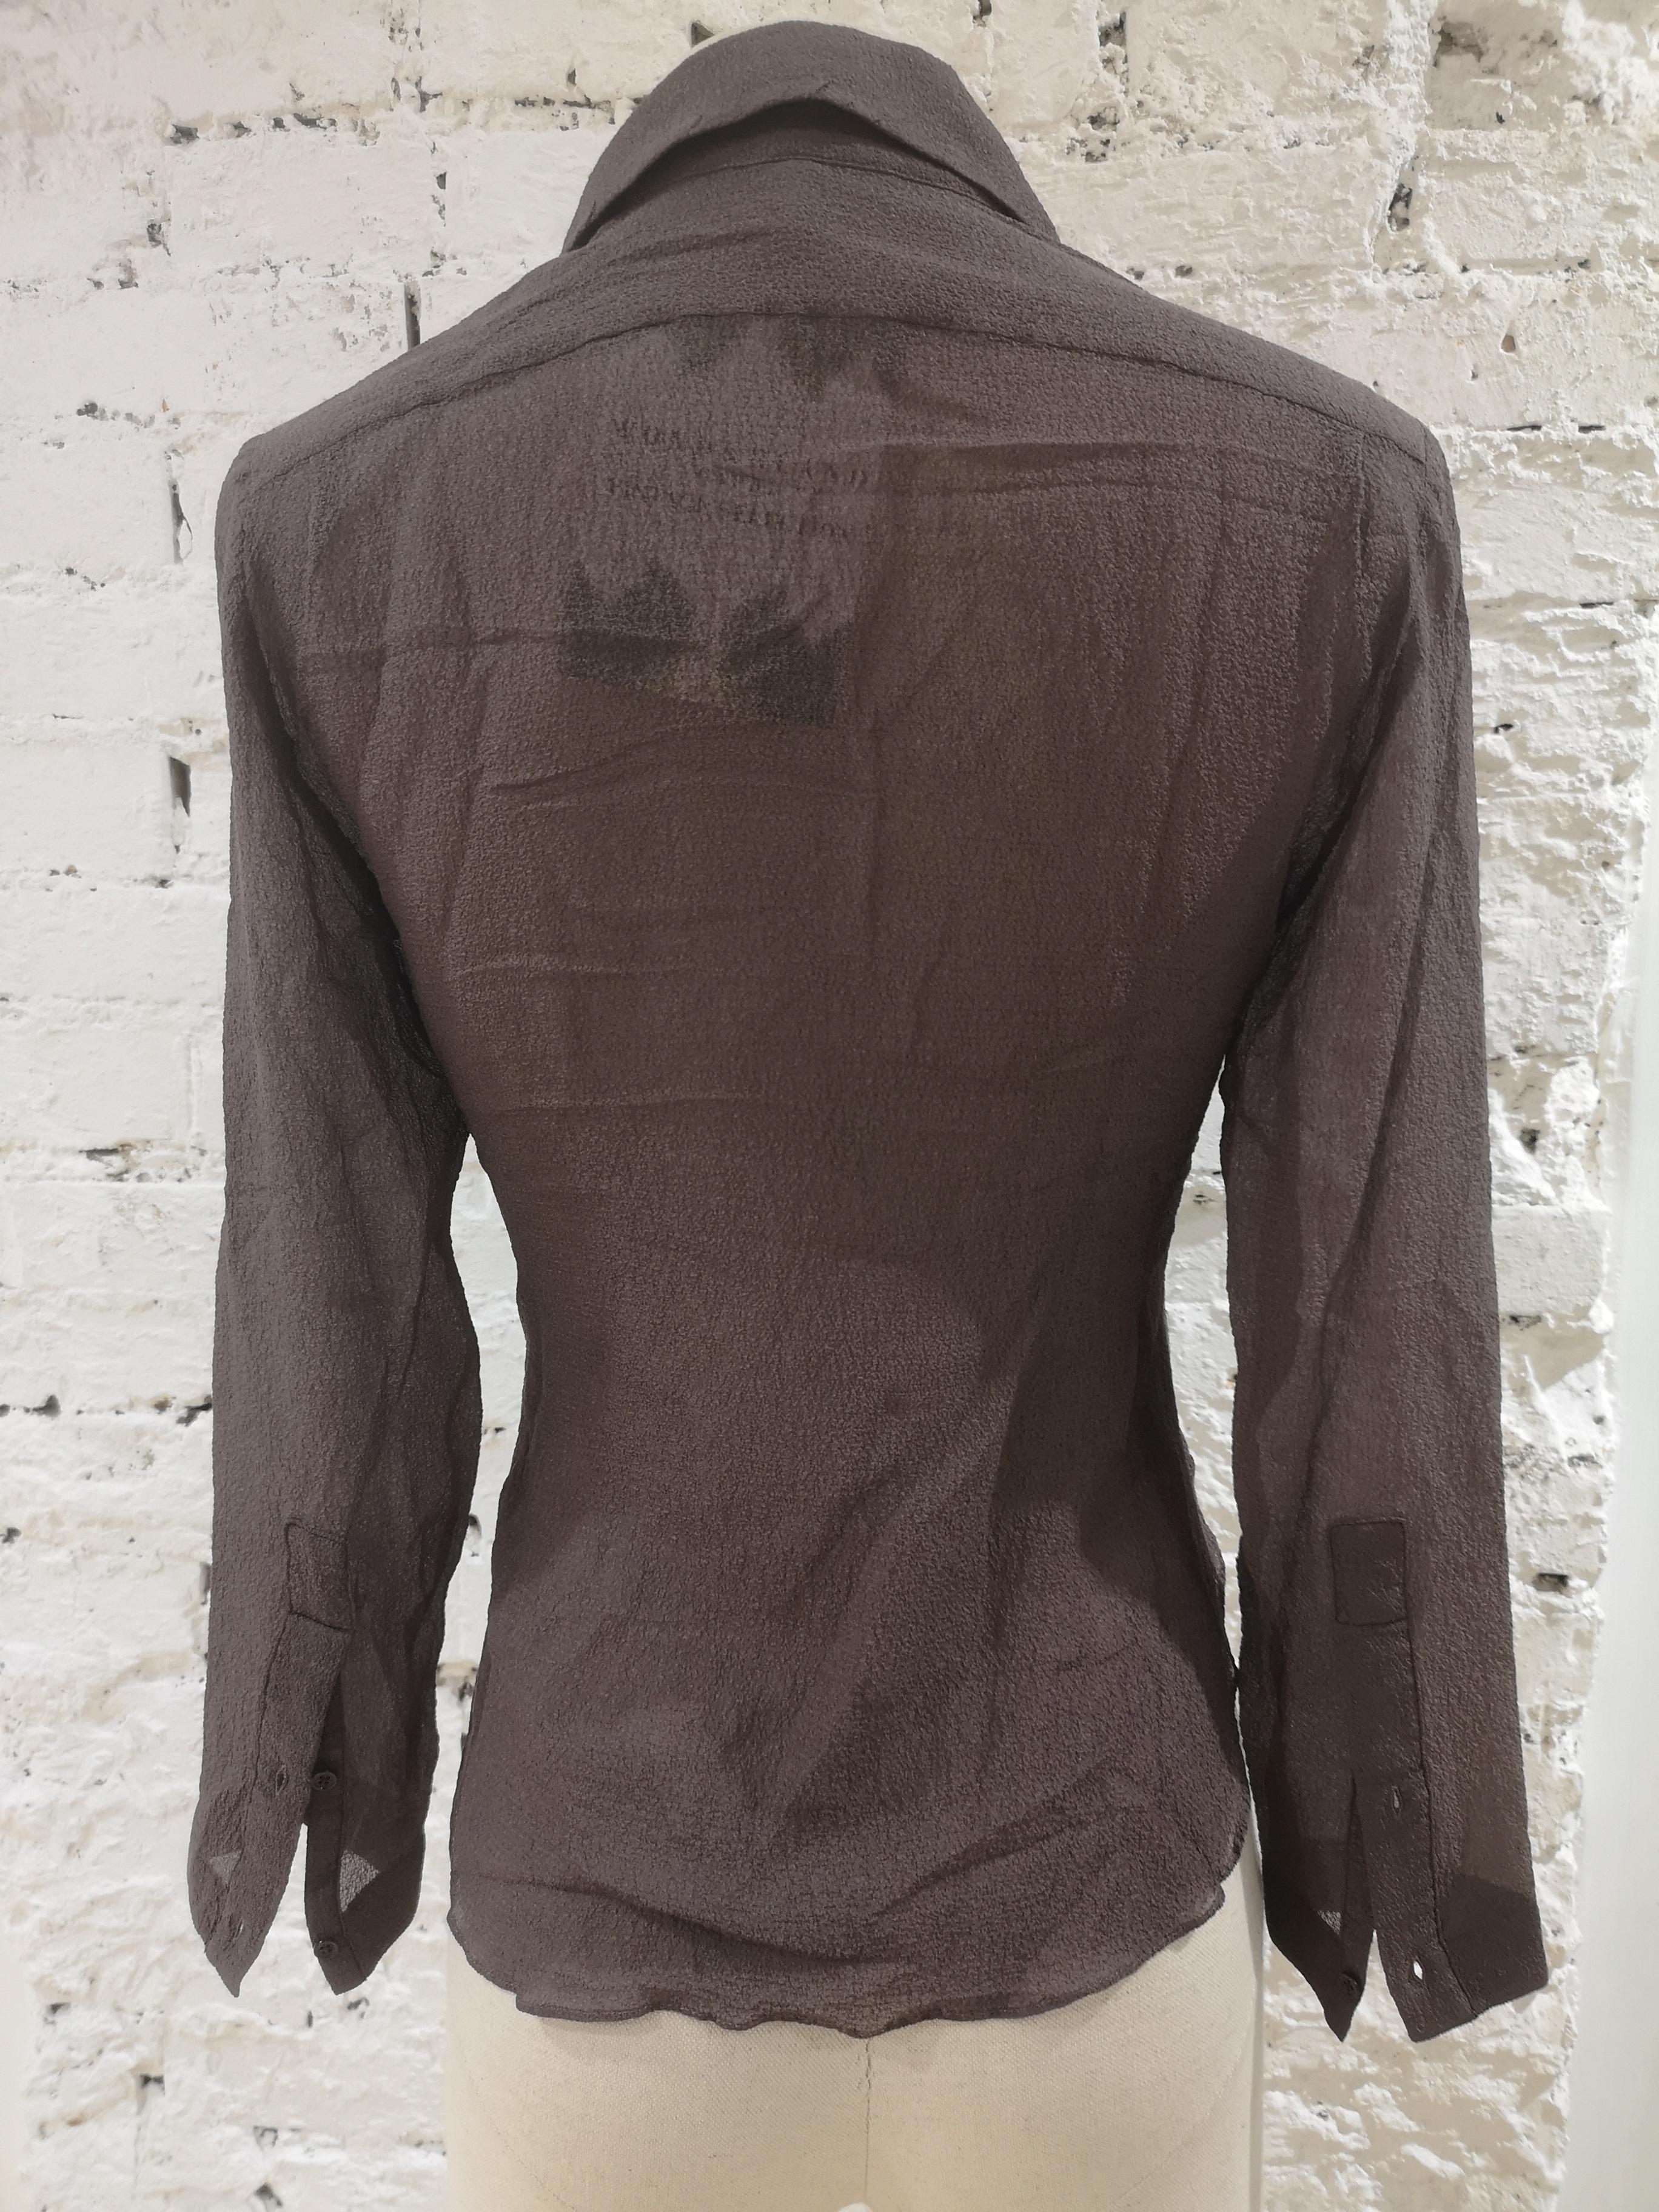 Hermès see through brown shirt 
size 38